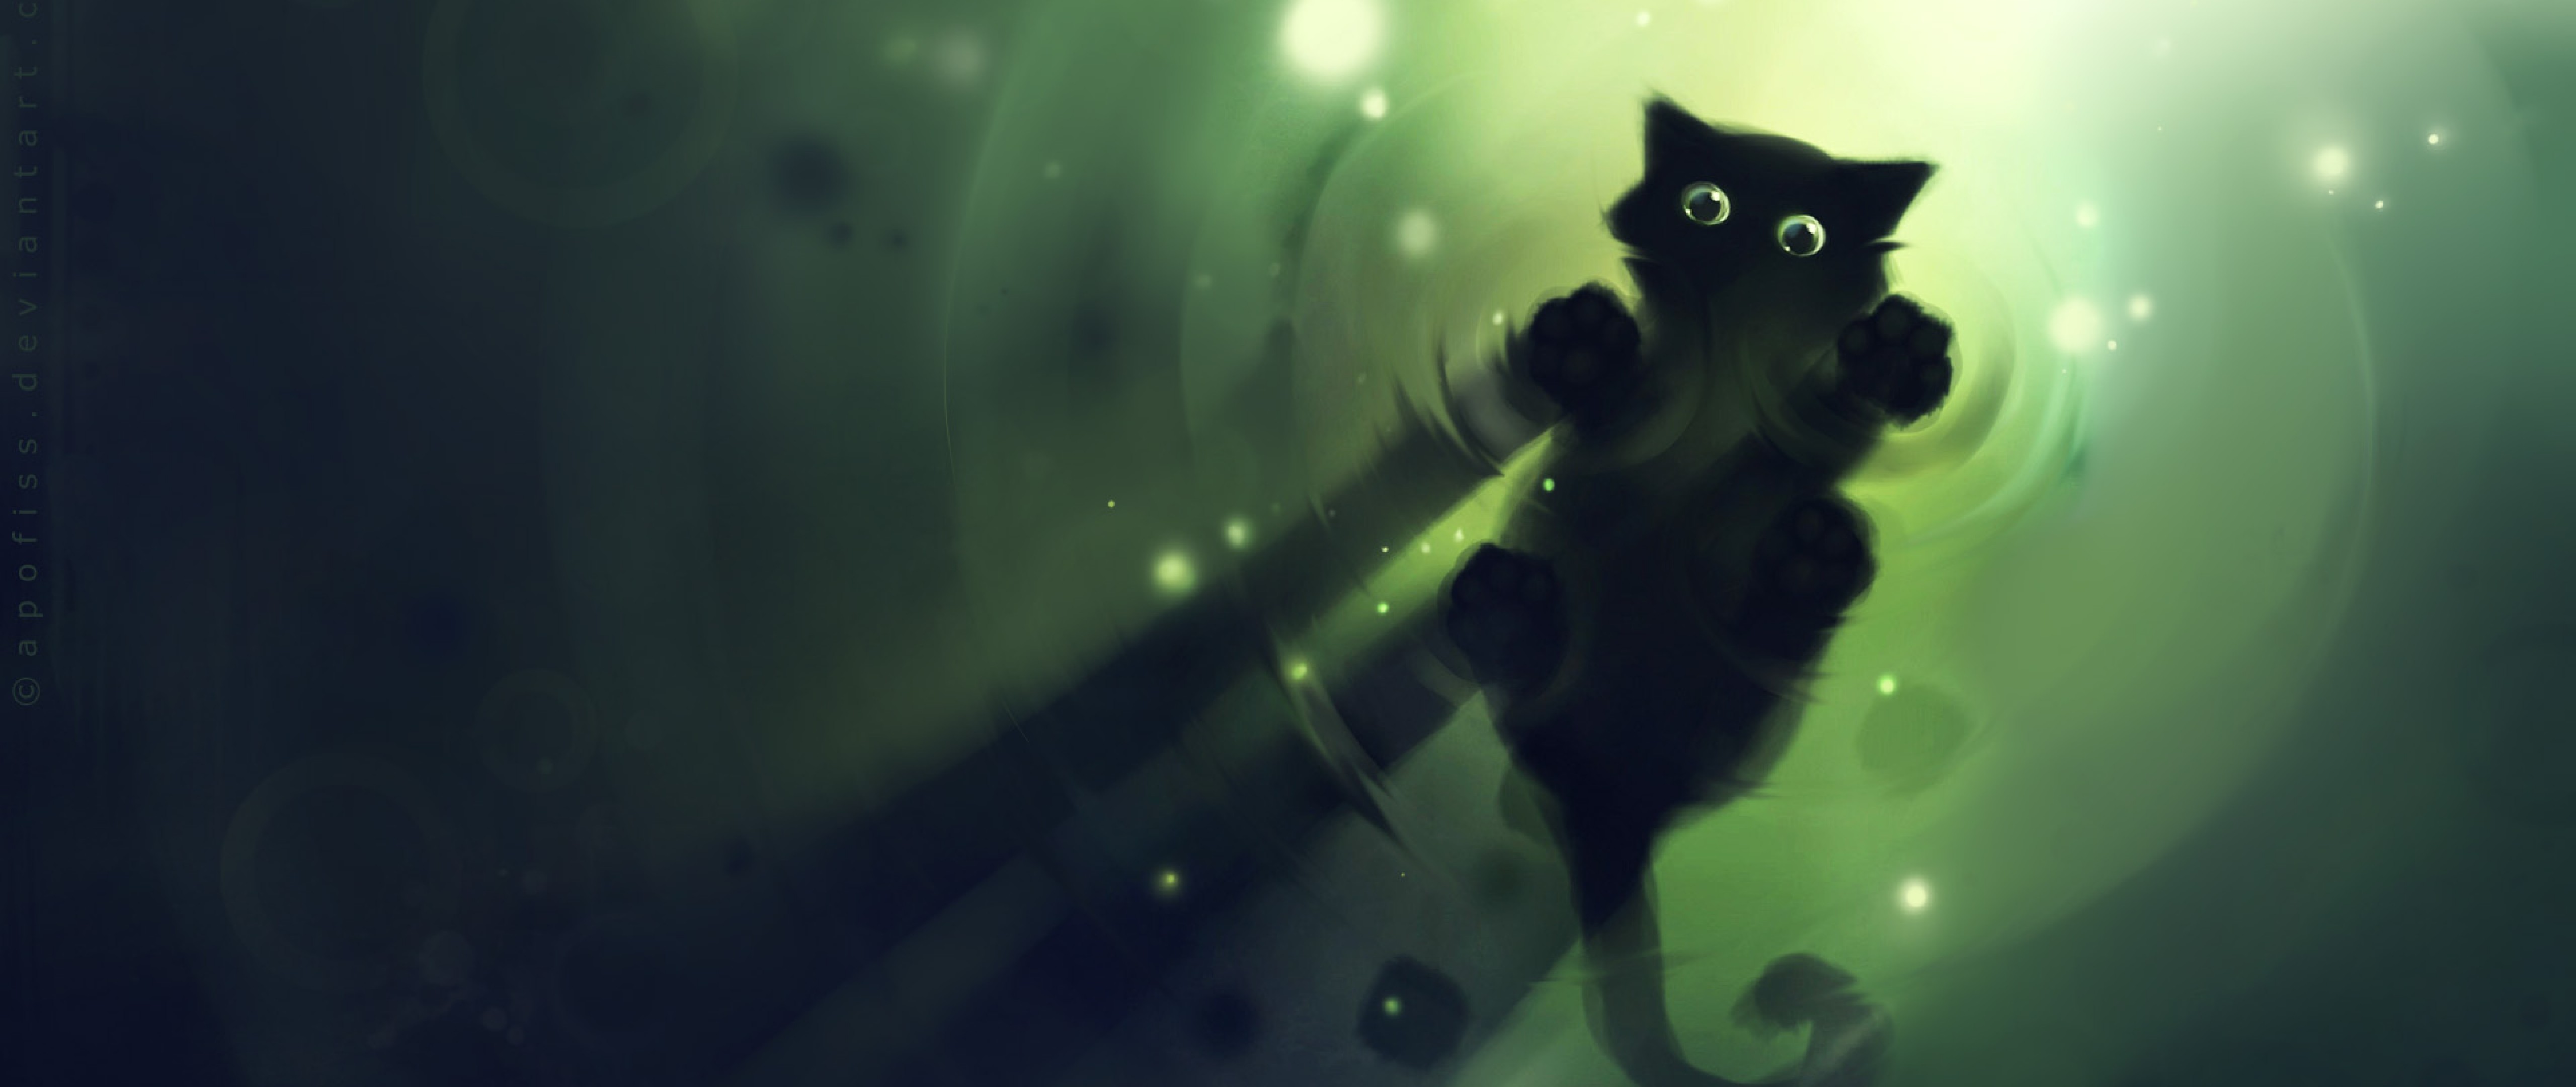 Cute Animated Cat Cartoon Background Wallpaper for Desktop ...